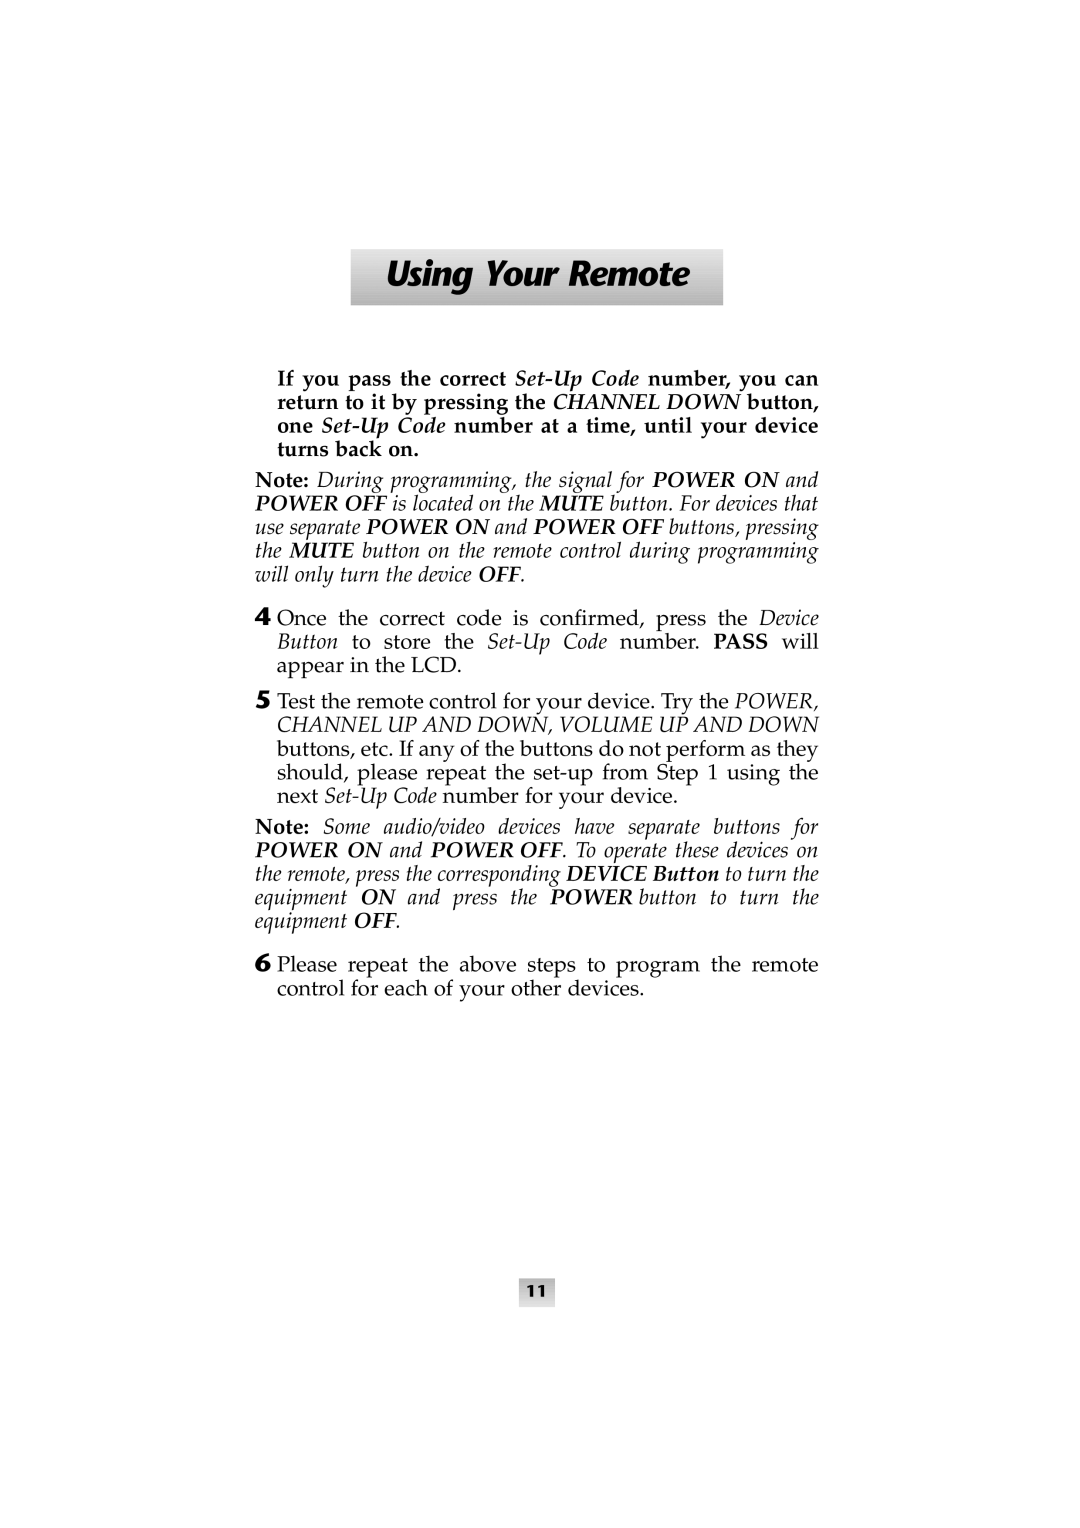 Universal Remote Control SL-8000 manual Using Your Remote 